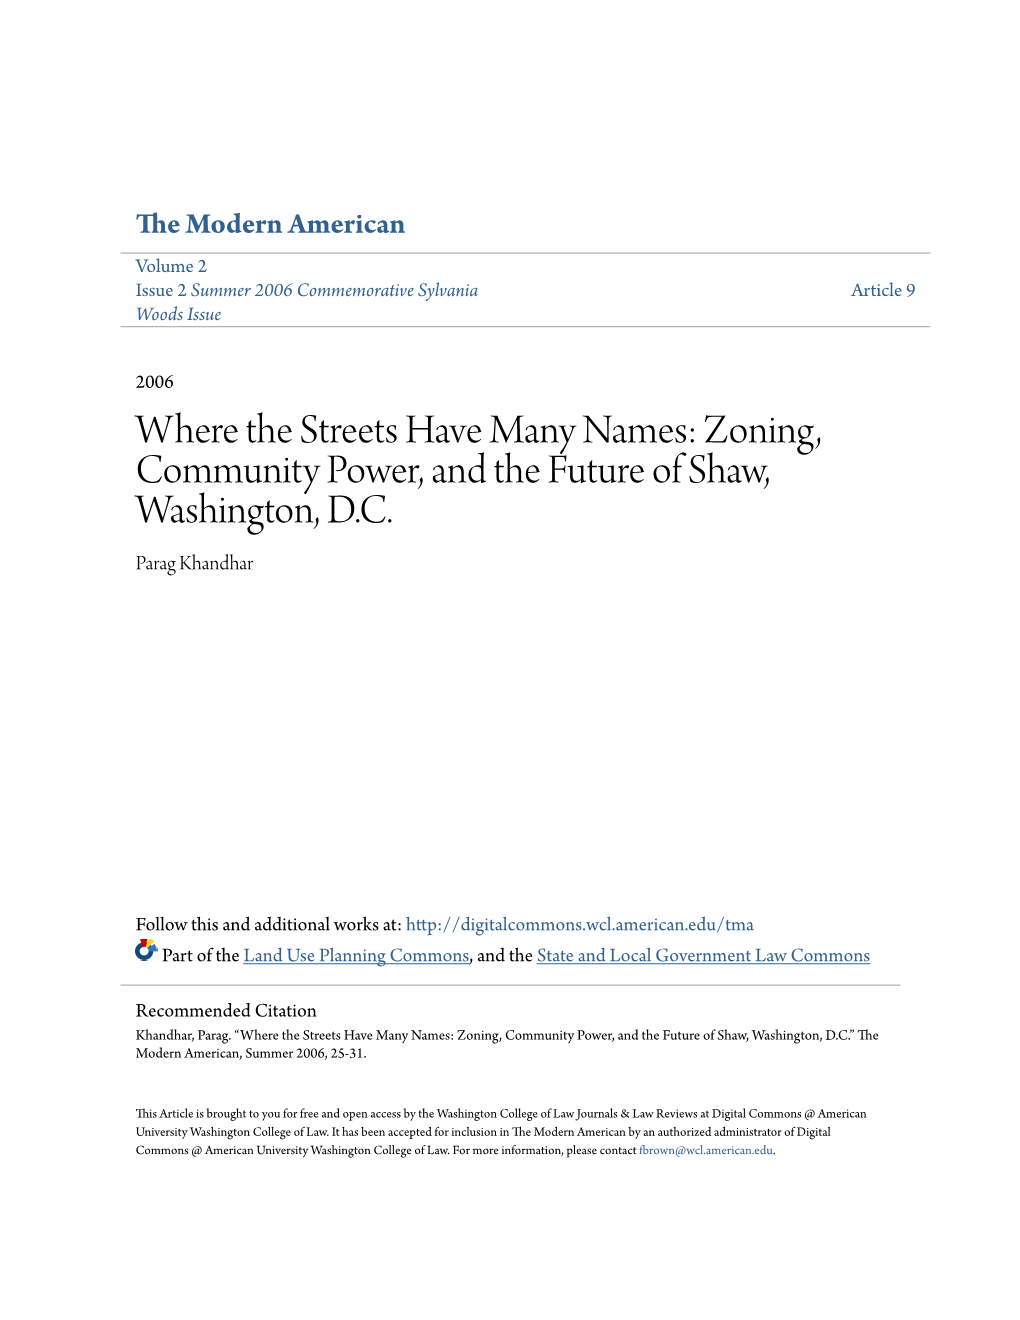 Zoning, Community Power, and the Future of Shaw, Washington, DC